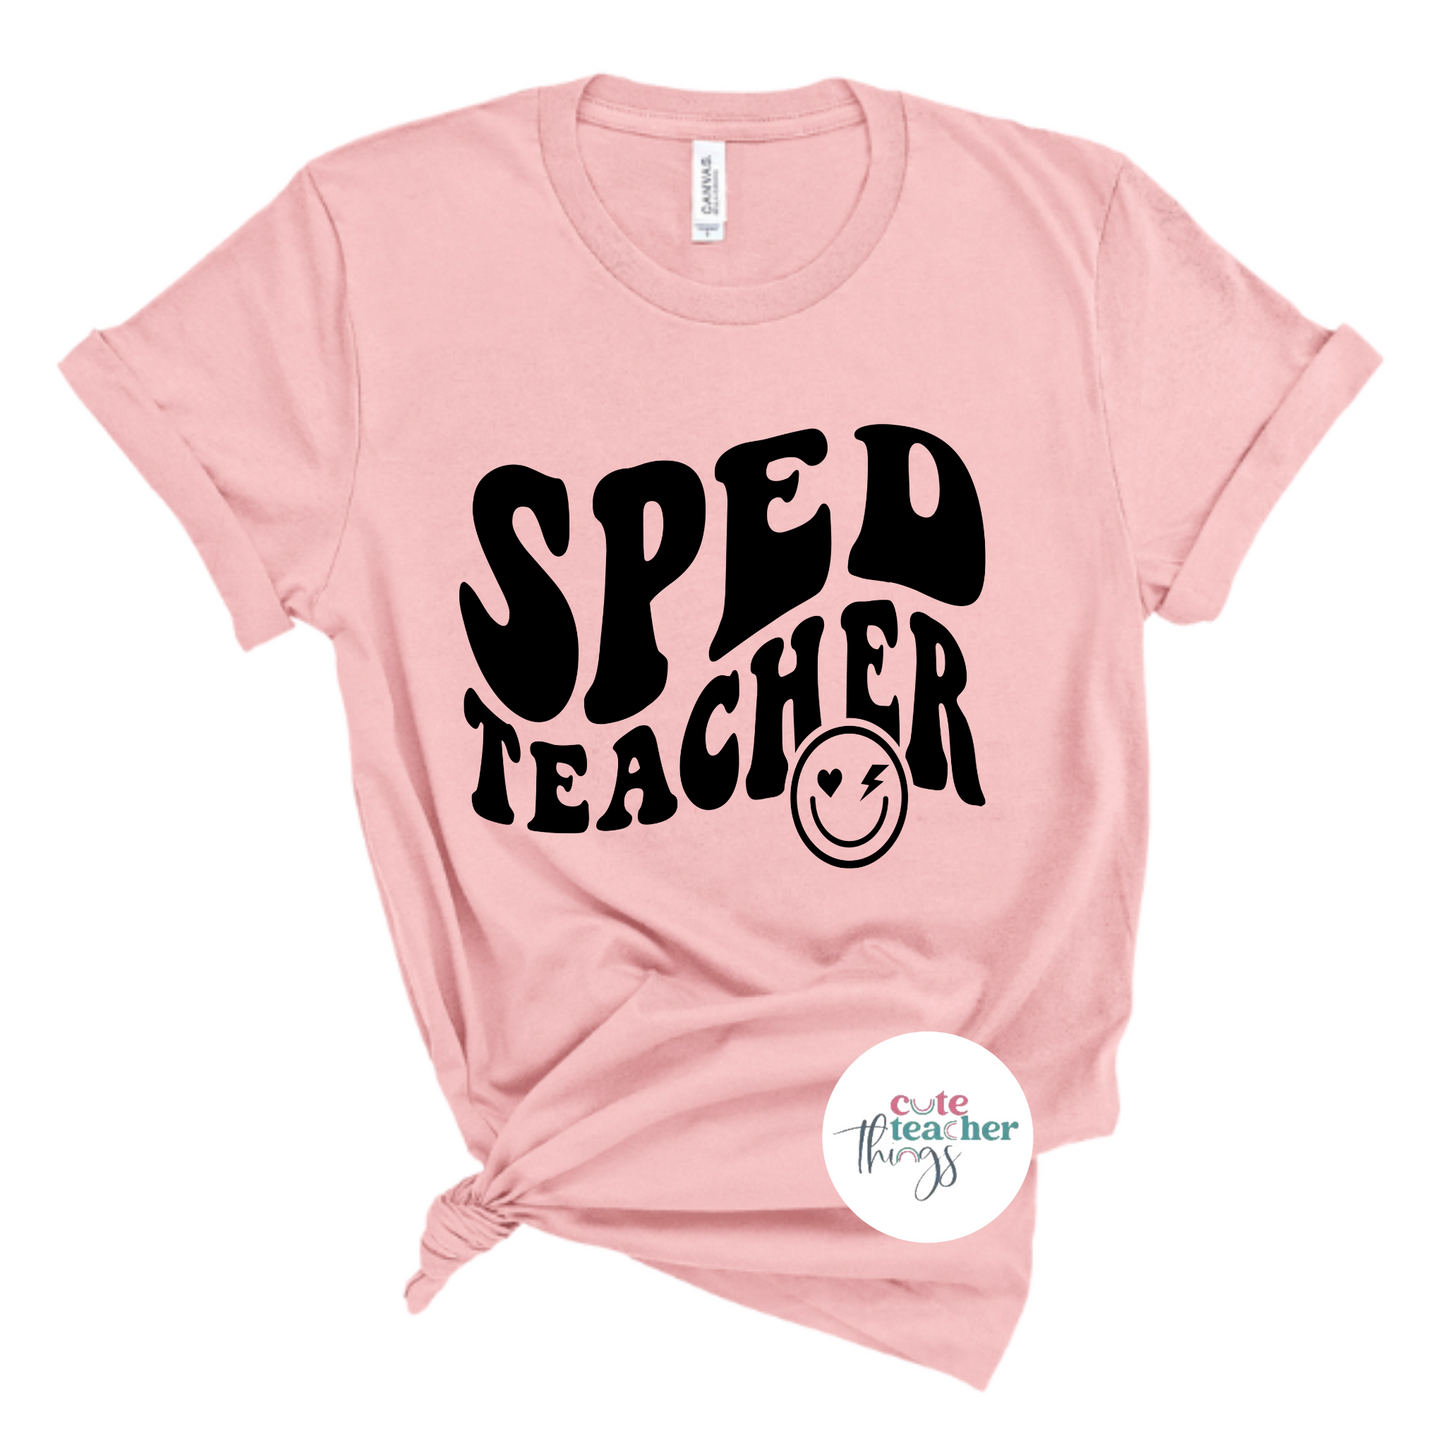 sped teachers shirt, sped team, sped squad